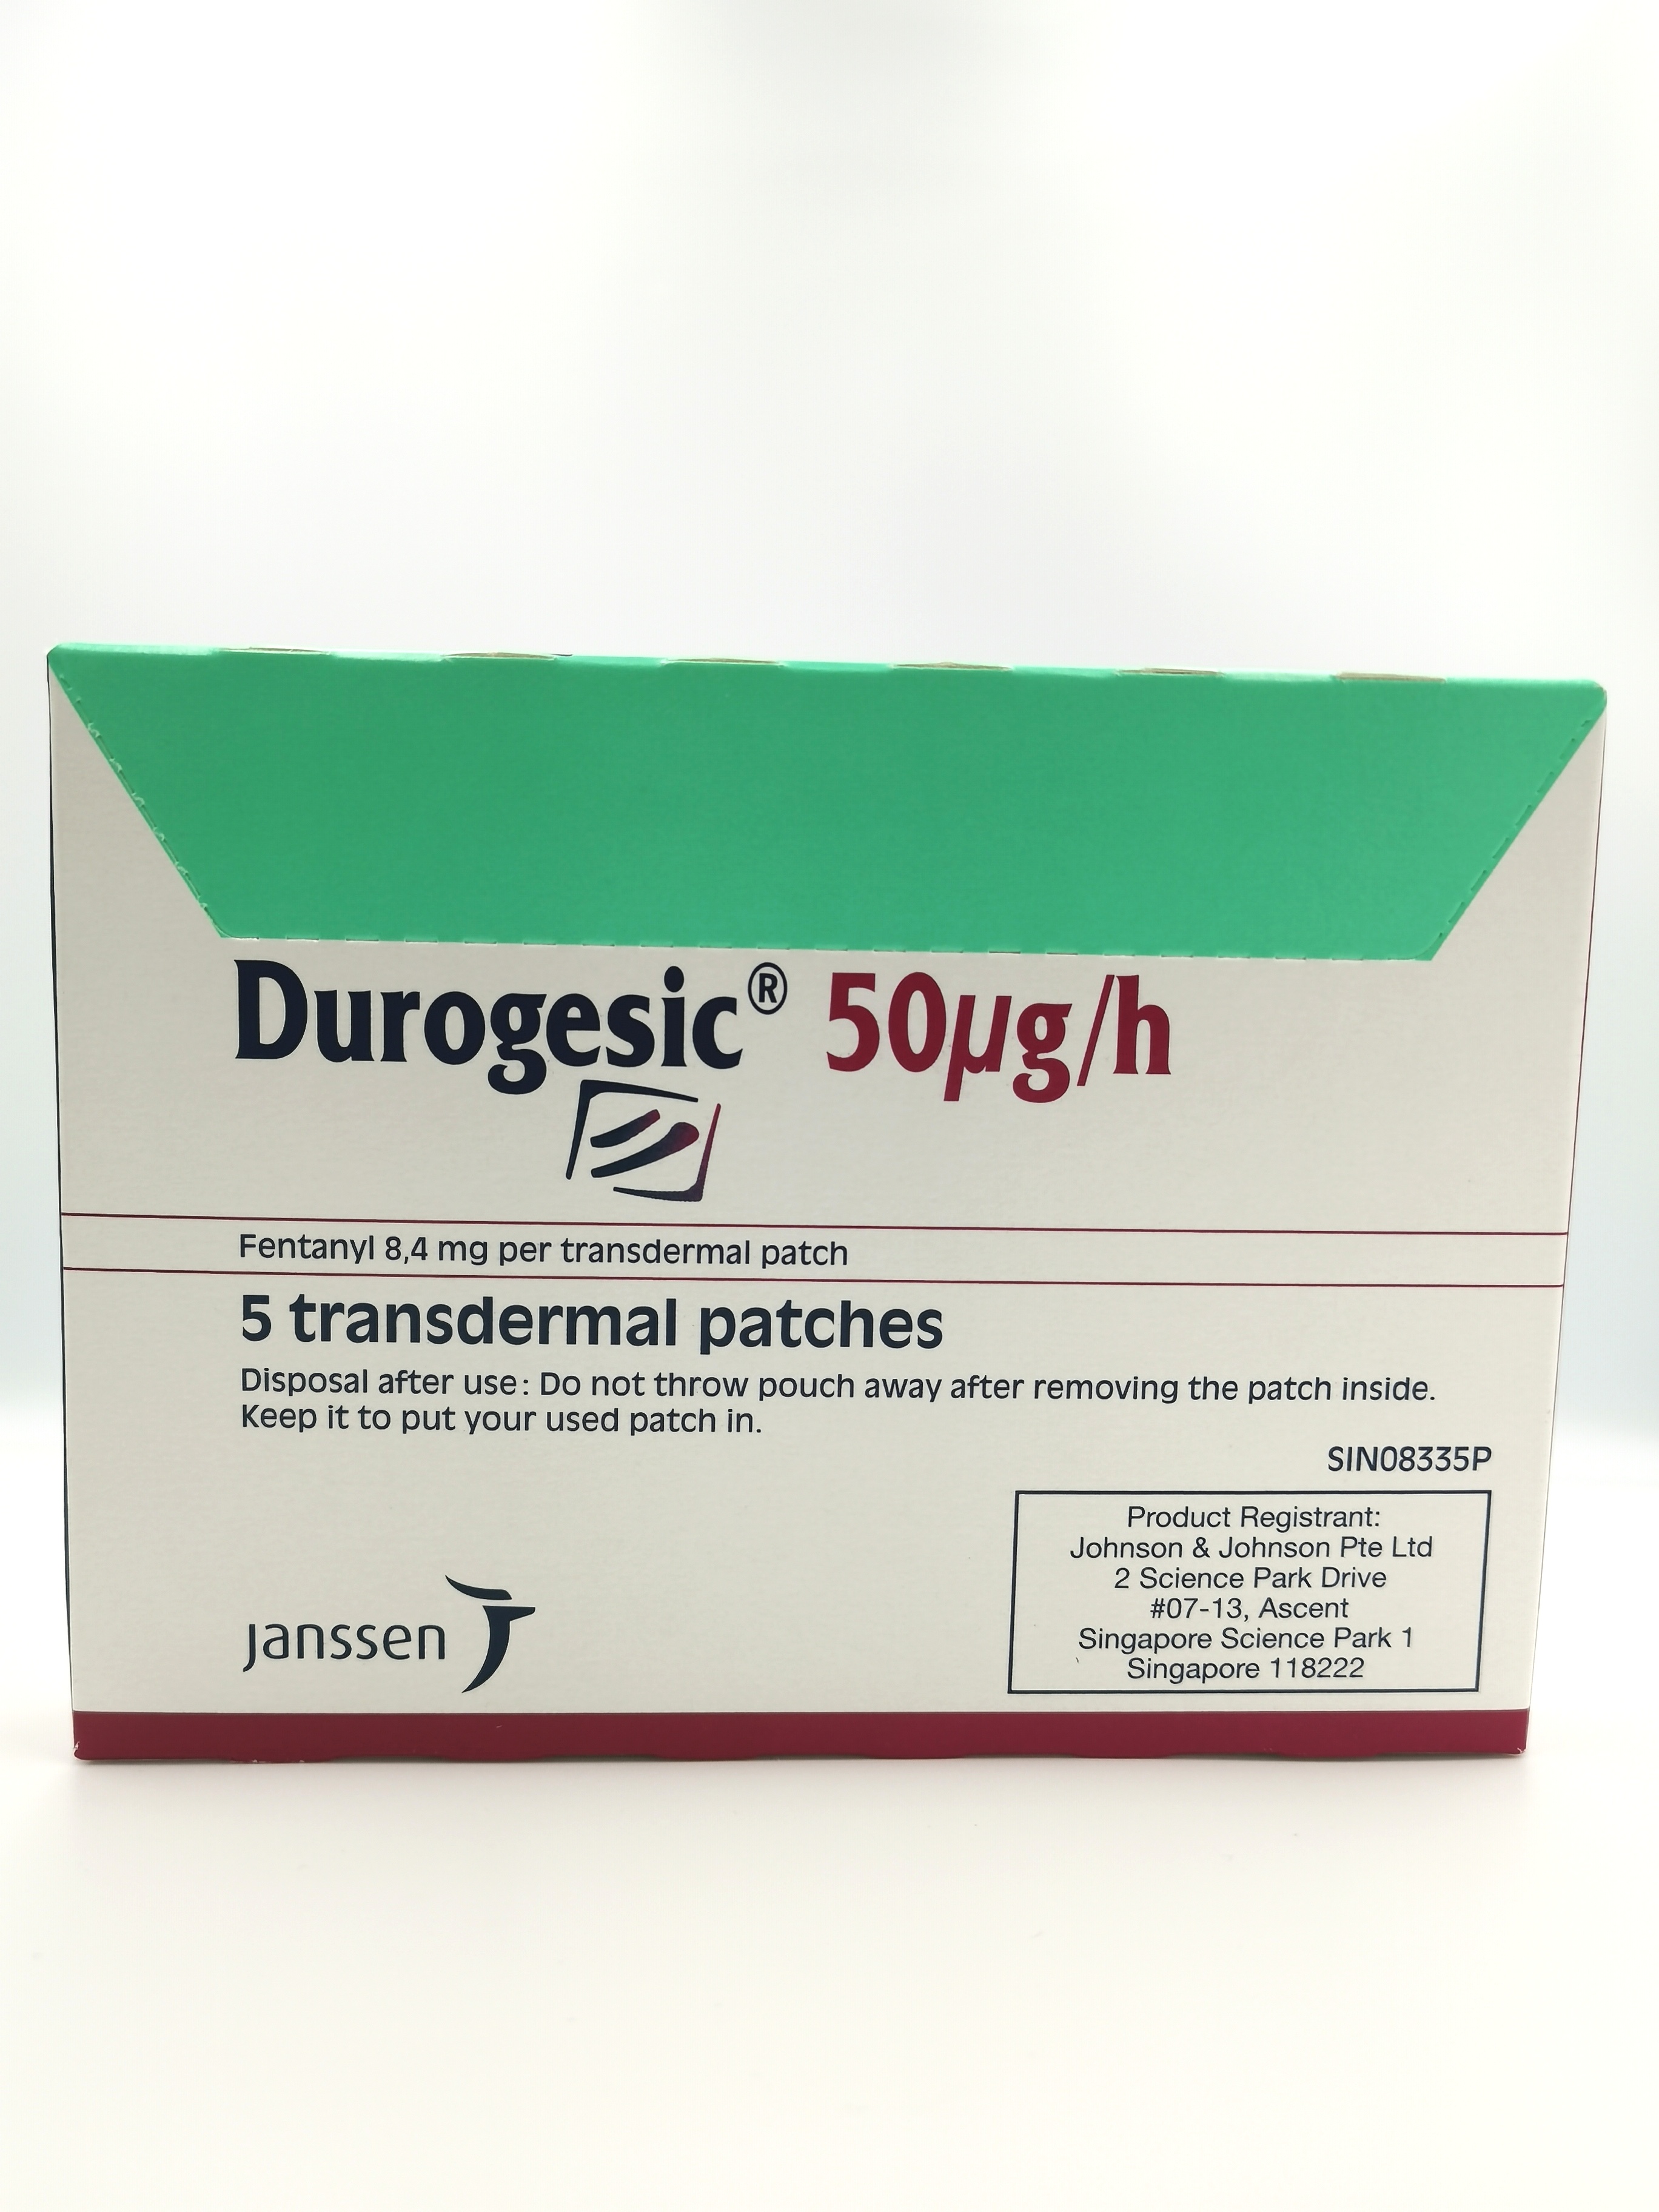 Uses of Durogesic 50